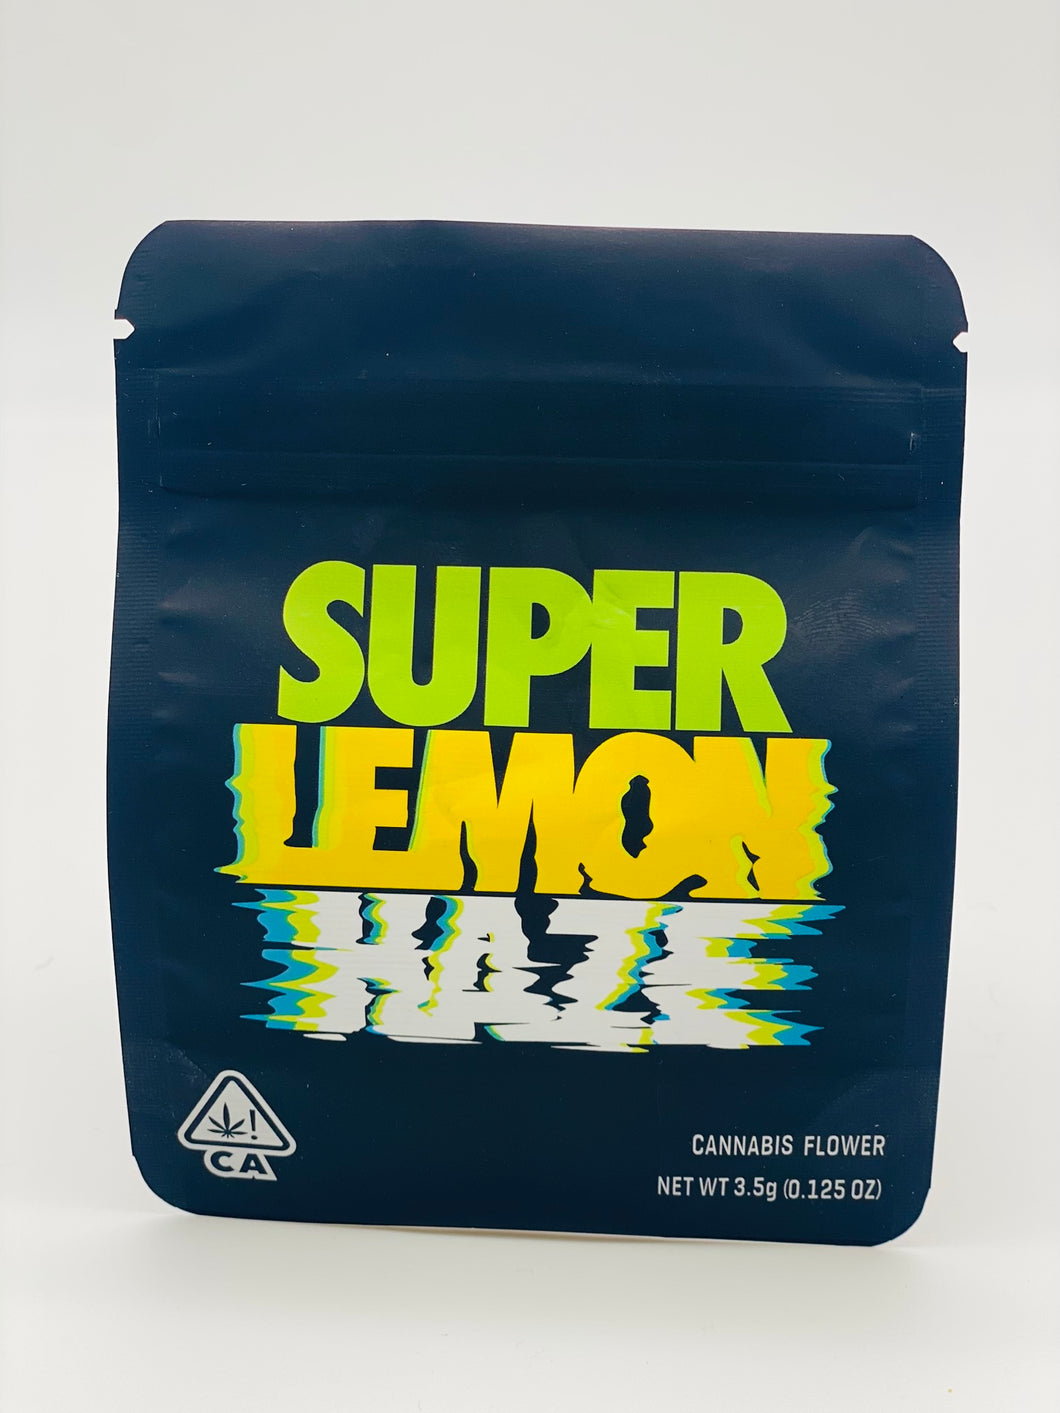 50 Super Lemon Haze 3.5-gram empty Mylar bags – My mylarbag